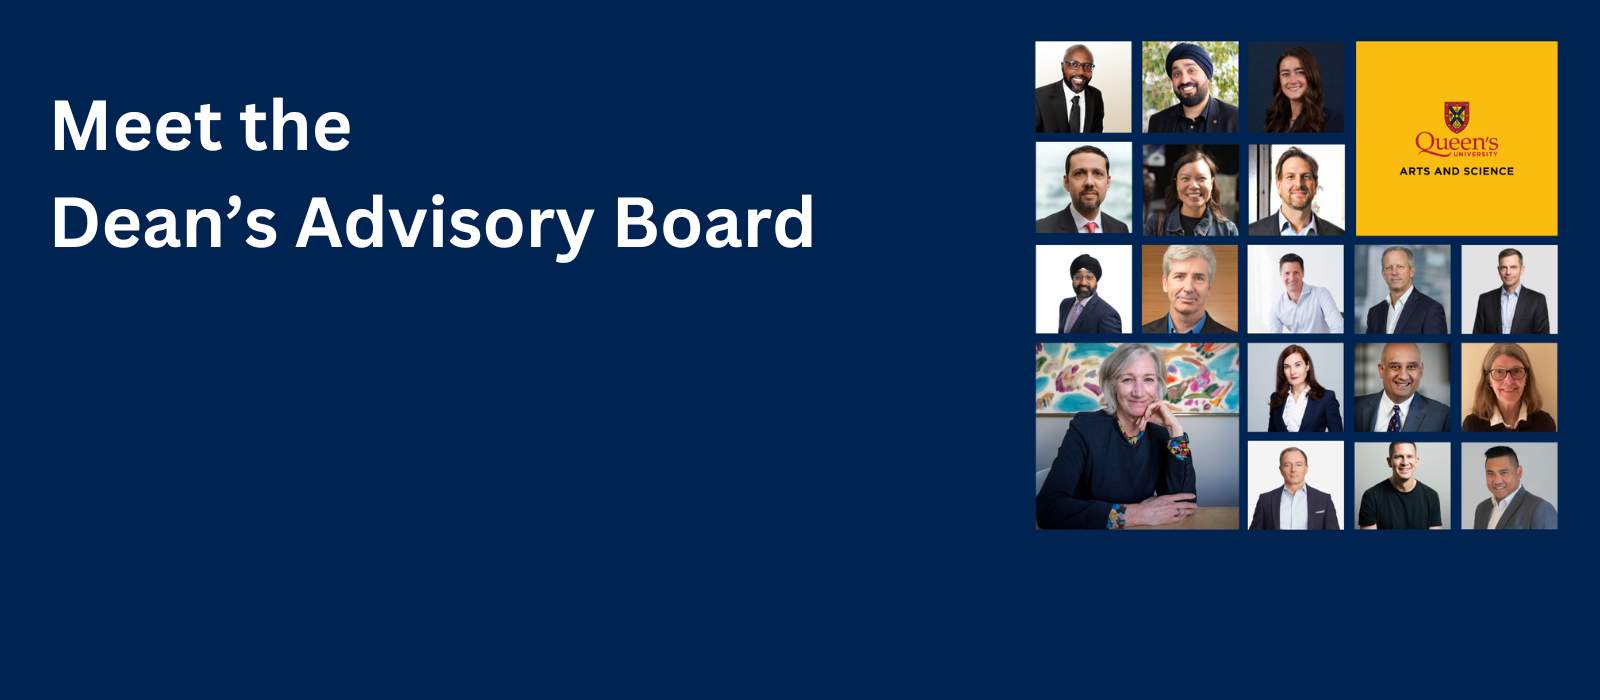 Meet the Dean's Advisory Board